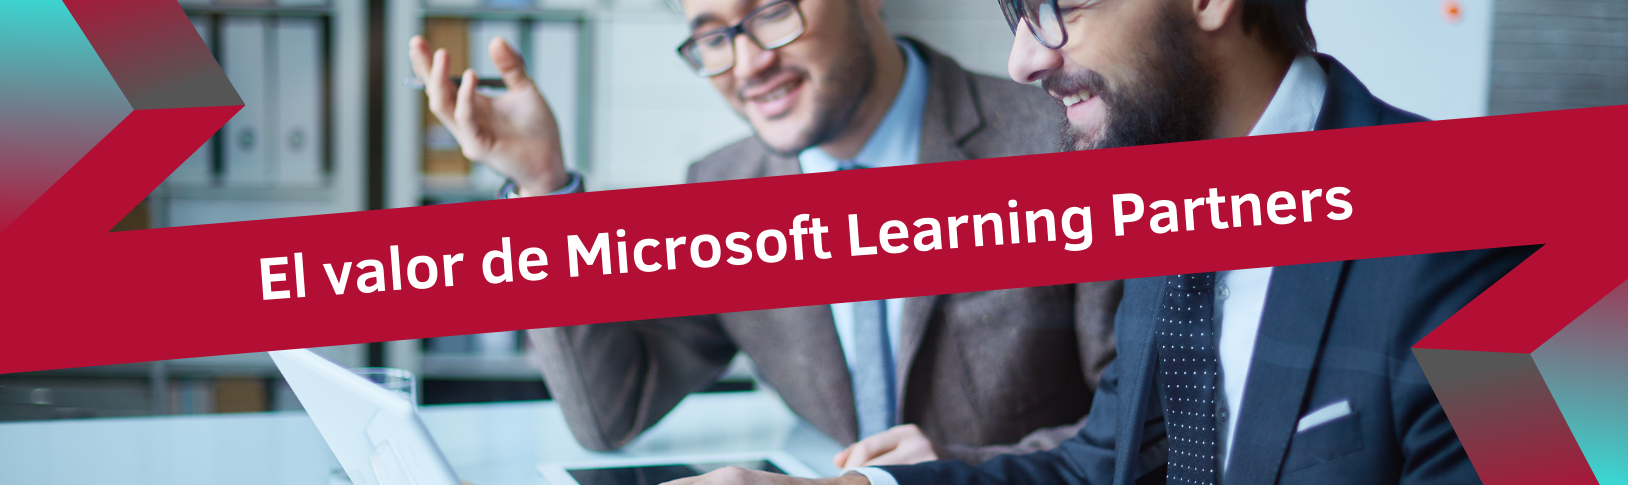 El valor de Microsoft Learning Partners